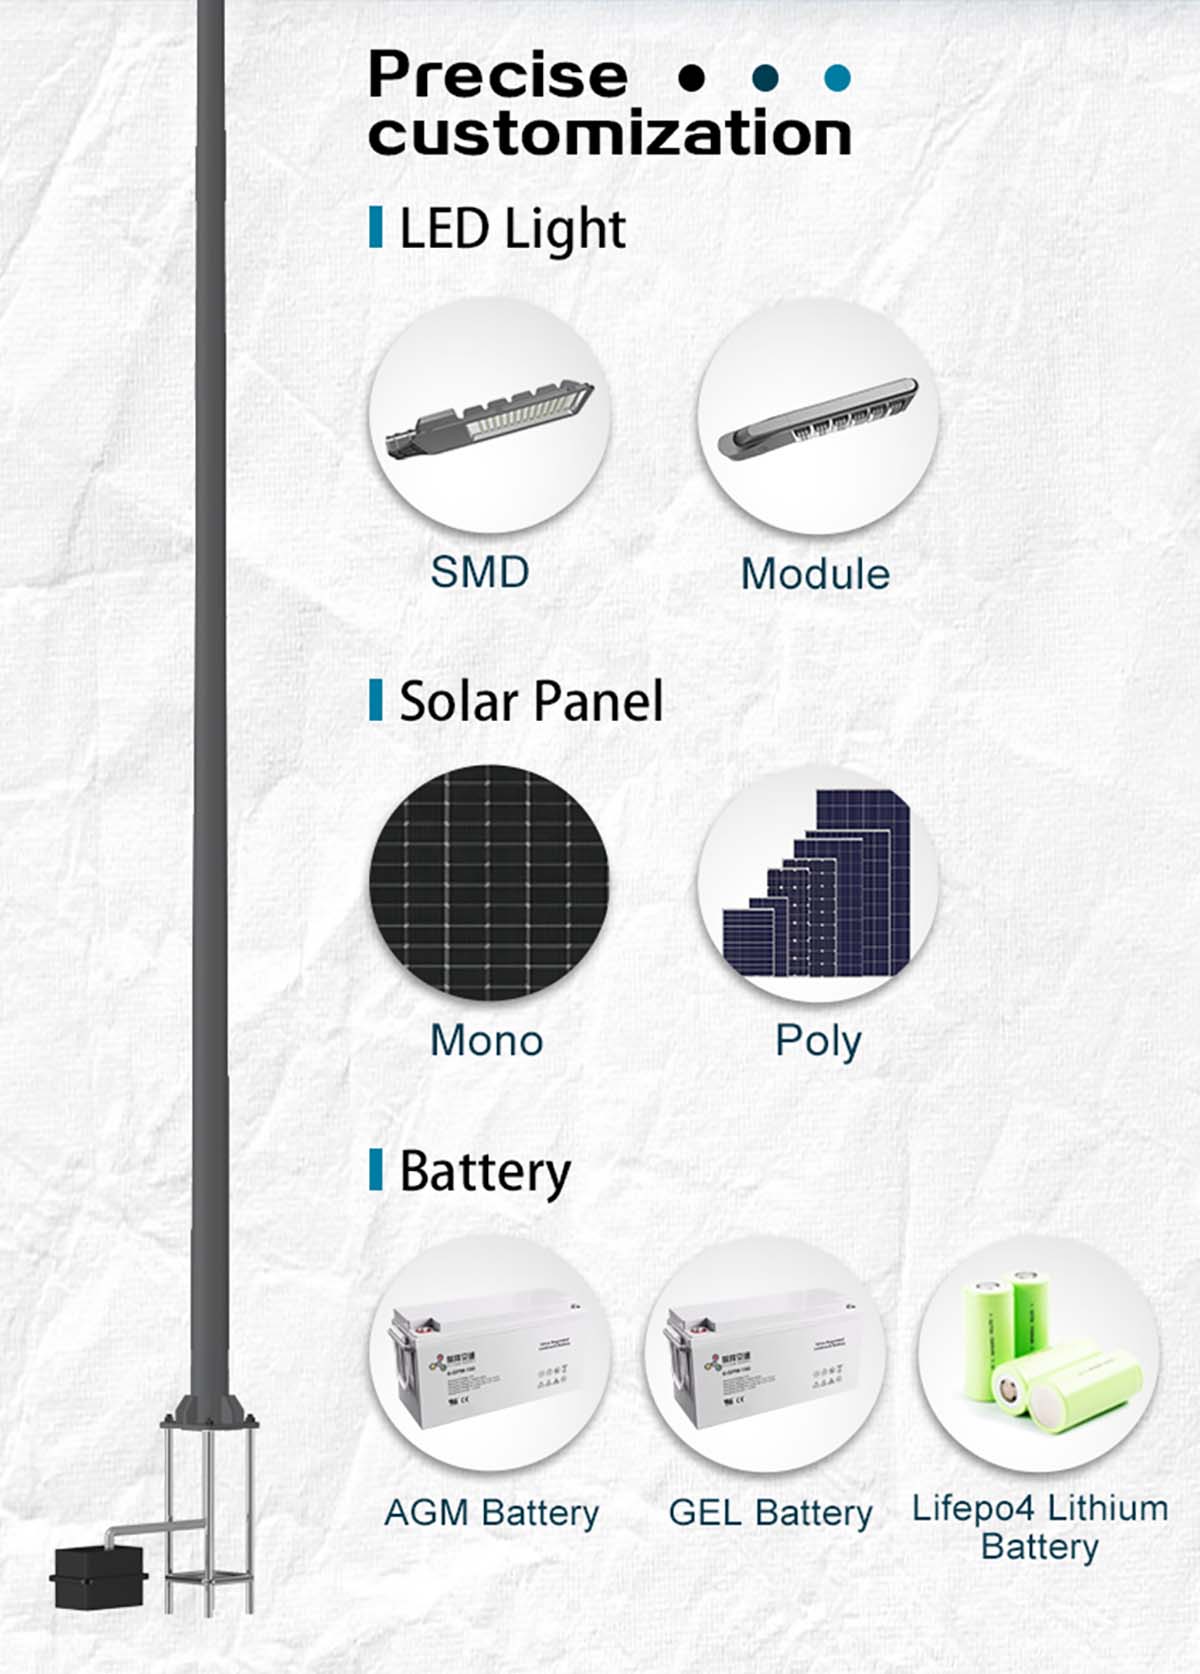 सौर्य-सडक-प्रकाश-GEL-ब्याट्री-बरीड-डिजाइन-1-0